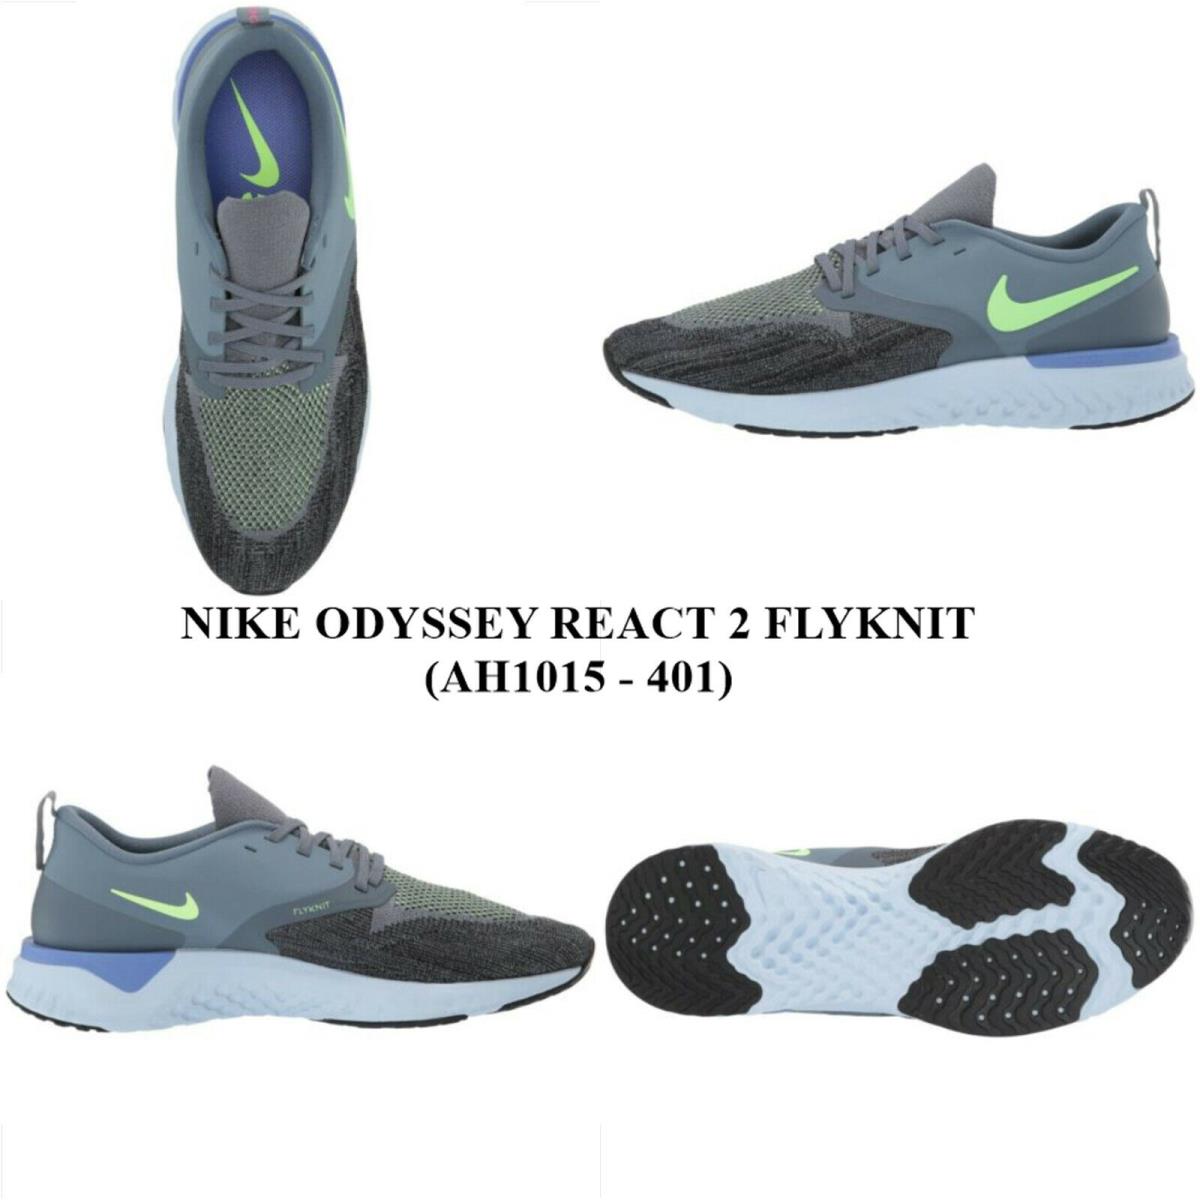 Nike Odyssey React 2 Flyknit AH1015 - 401 Men`s Running Shoes.nwb NO Lid - ARMORY BLUE / LIME BLAST-BLACK , ARMORY BLUE / LIME BLAST-BLACK Manufacturer